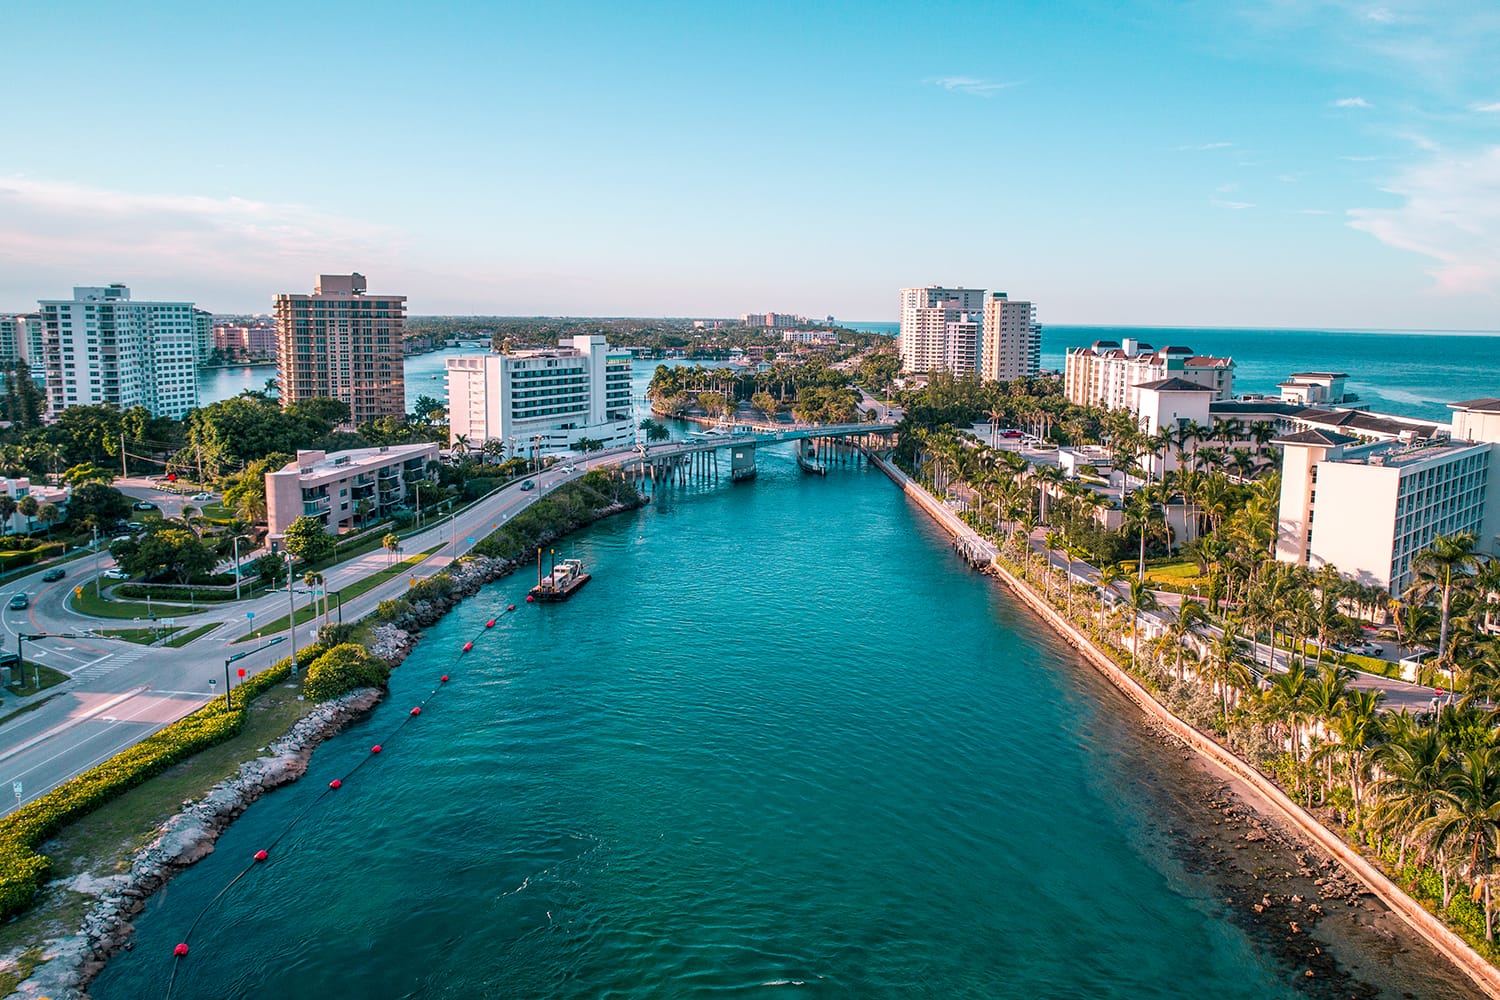 Aerial view of Boca Raton, Florida